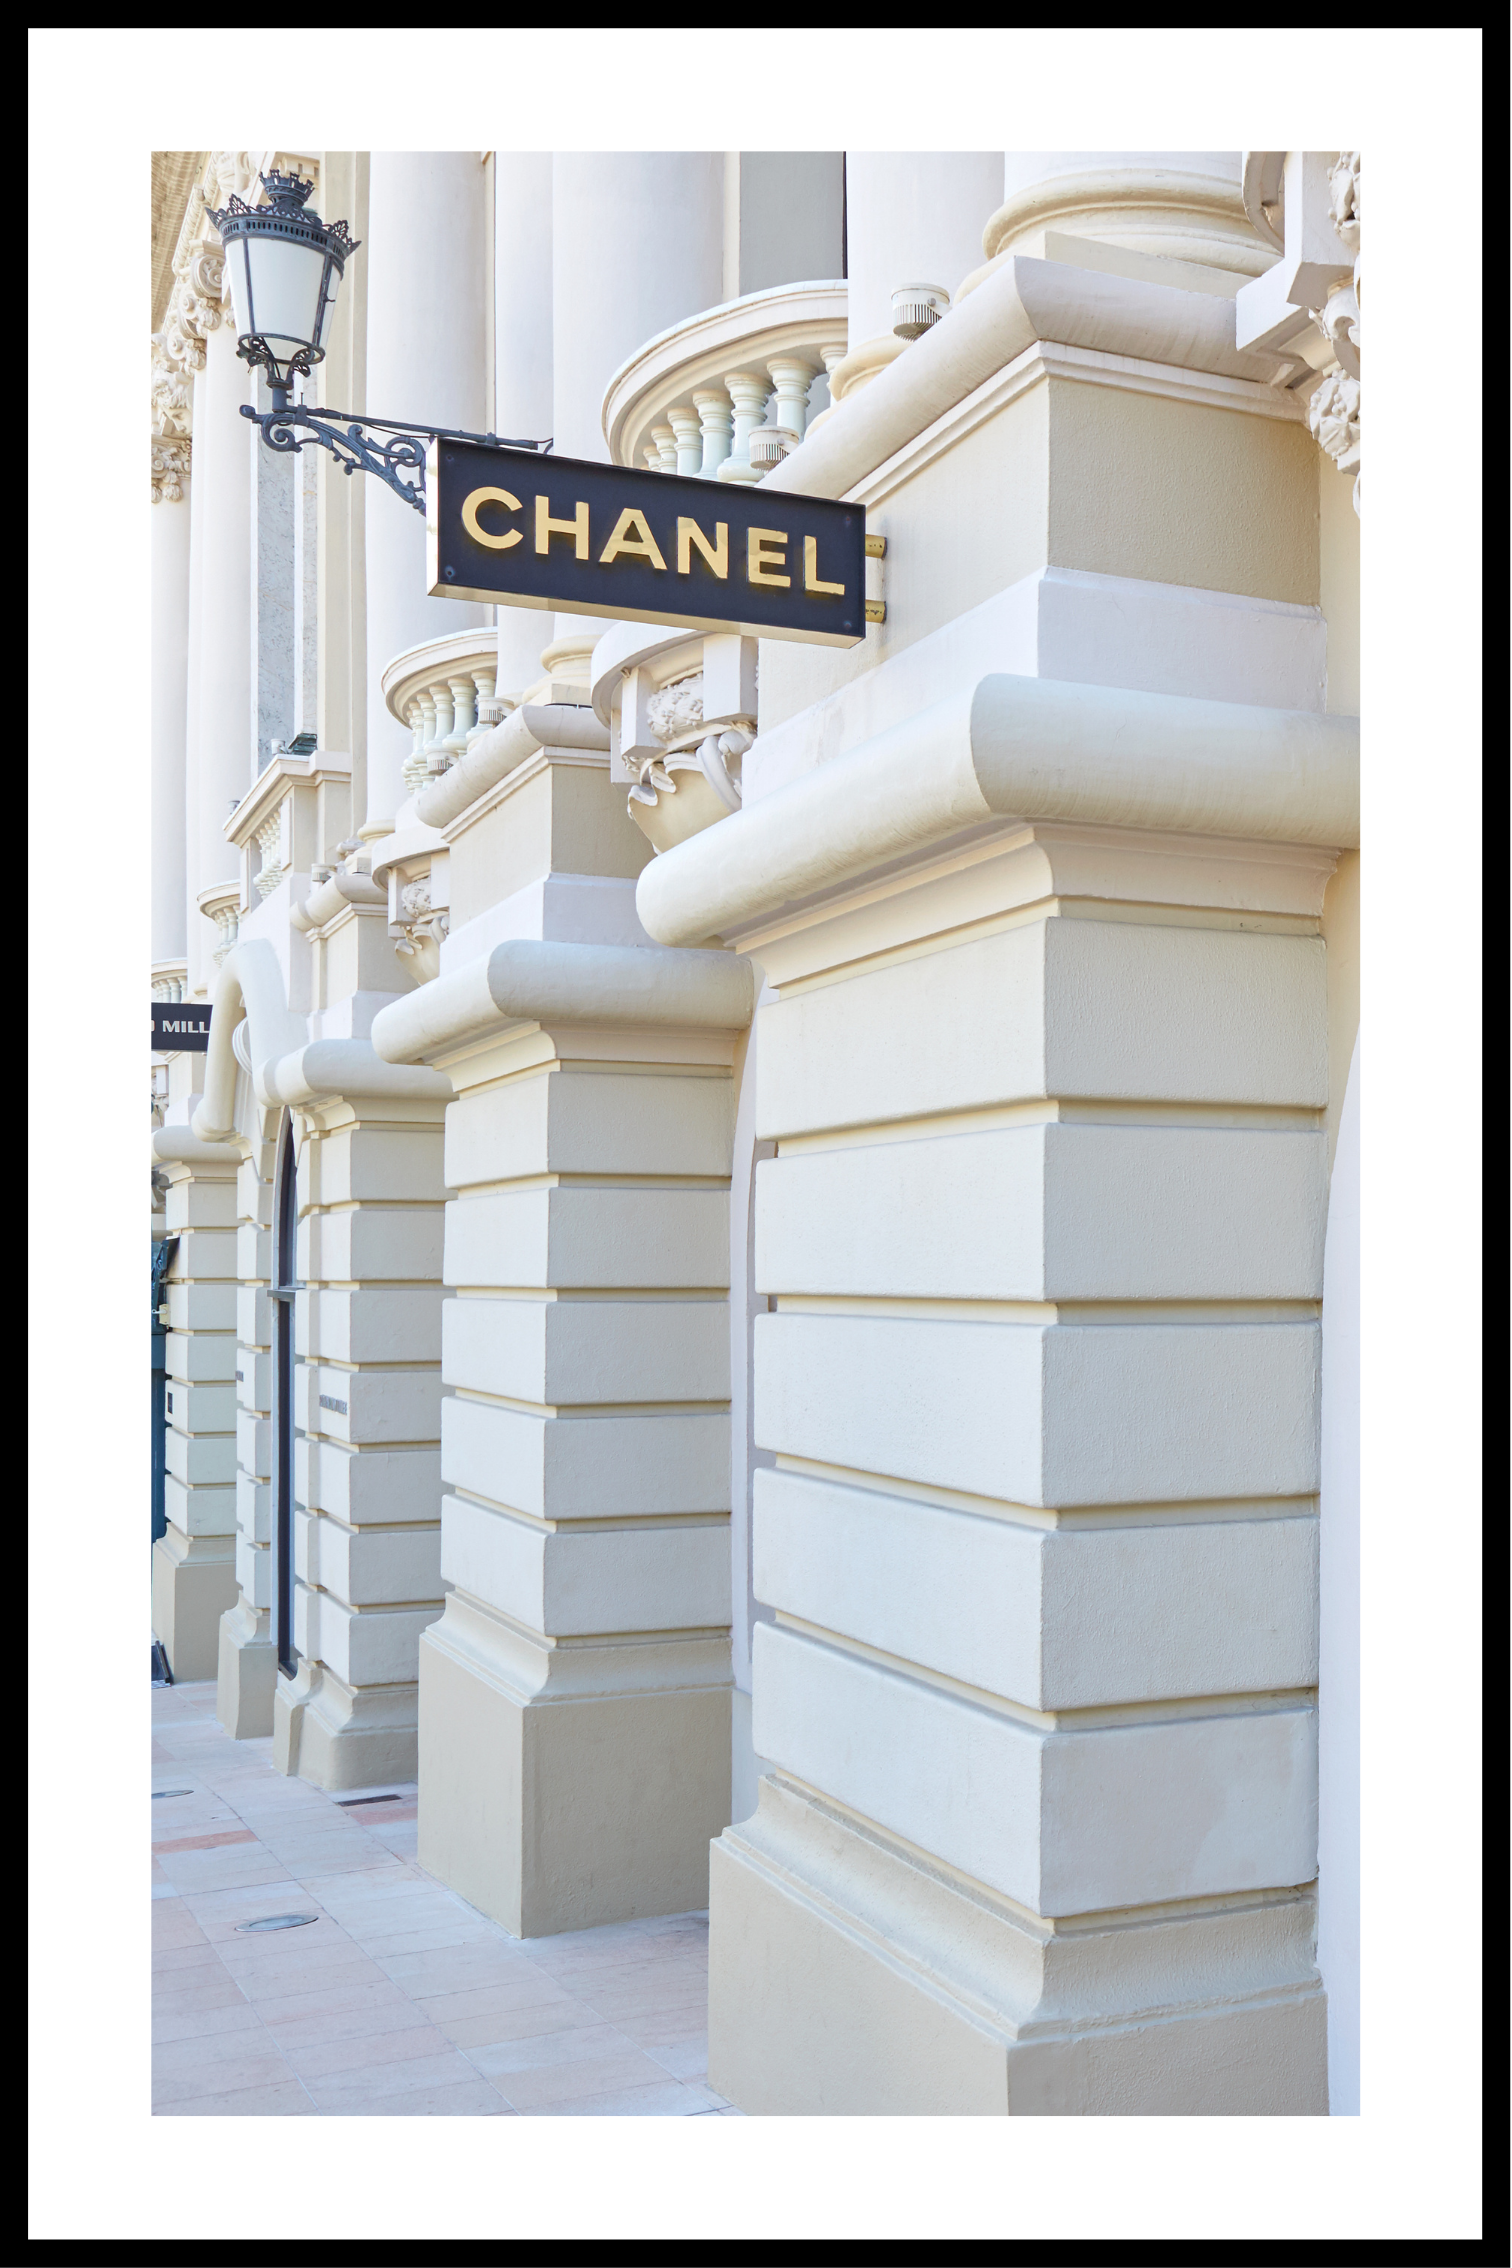 Chanel store no. 2 plakat